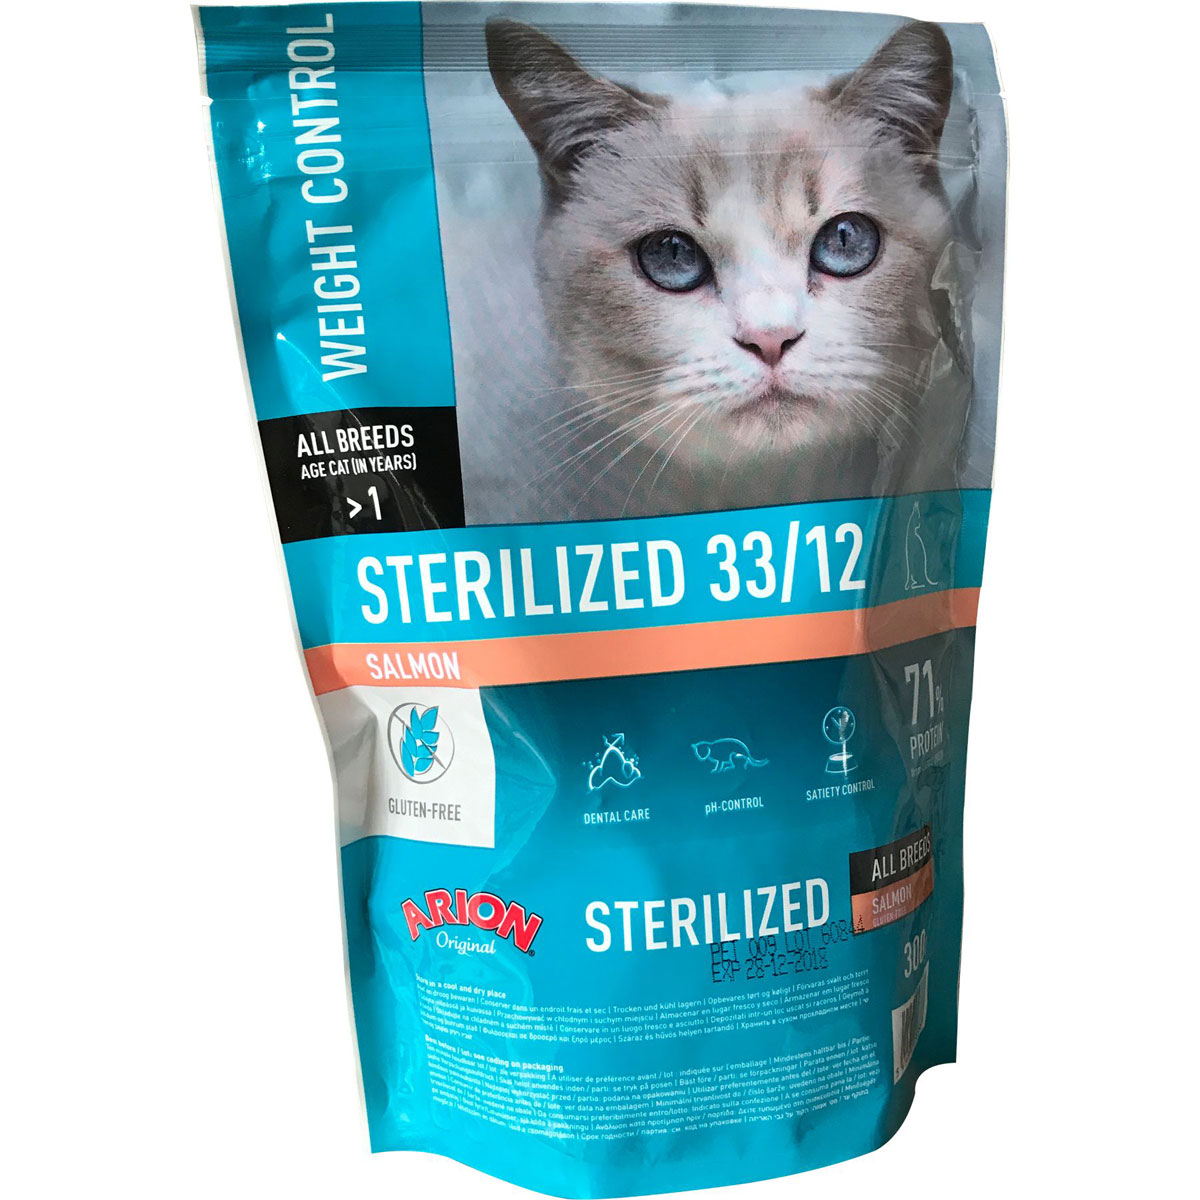 Cat Sterilized 33/12, Salmon, 300g